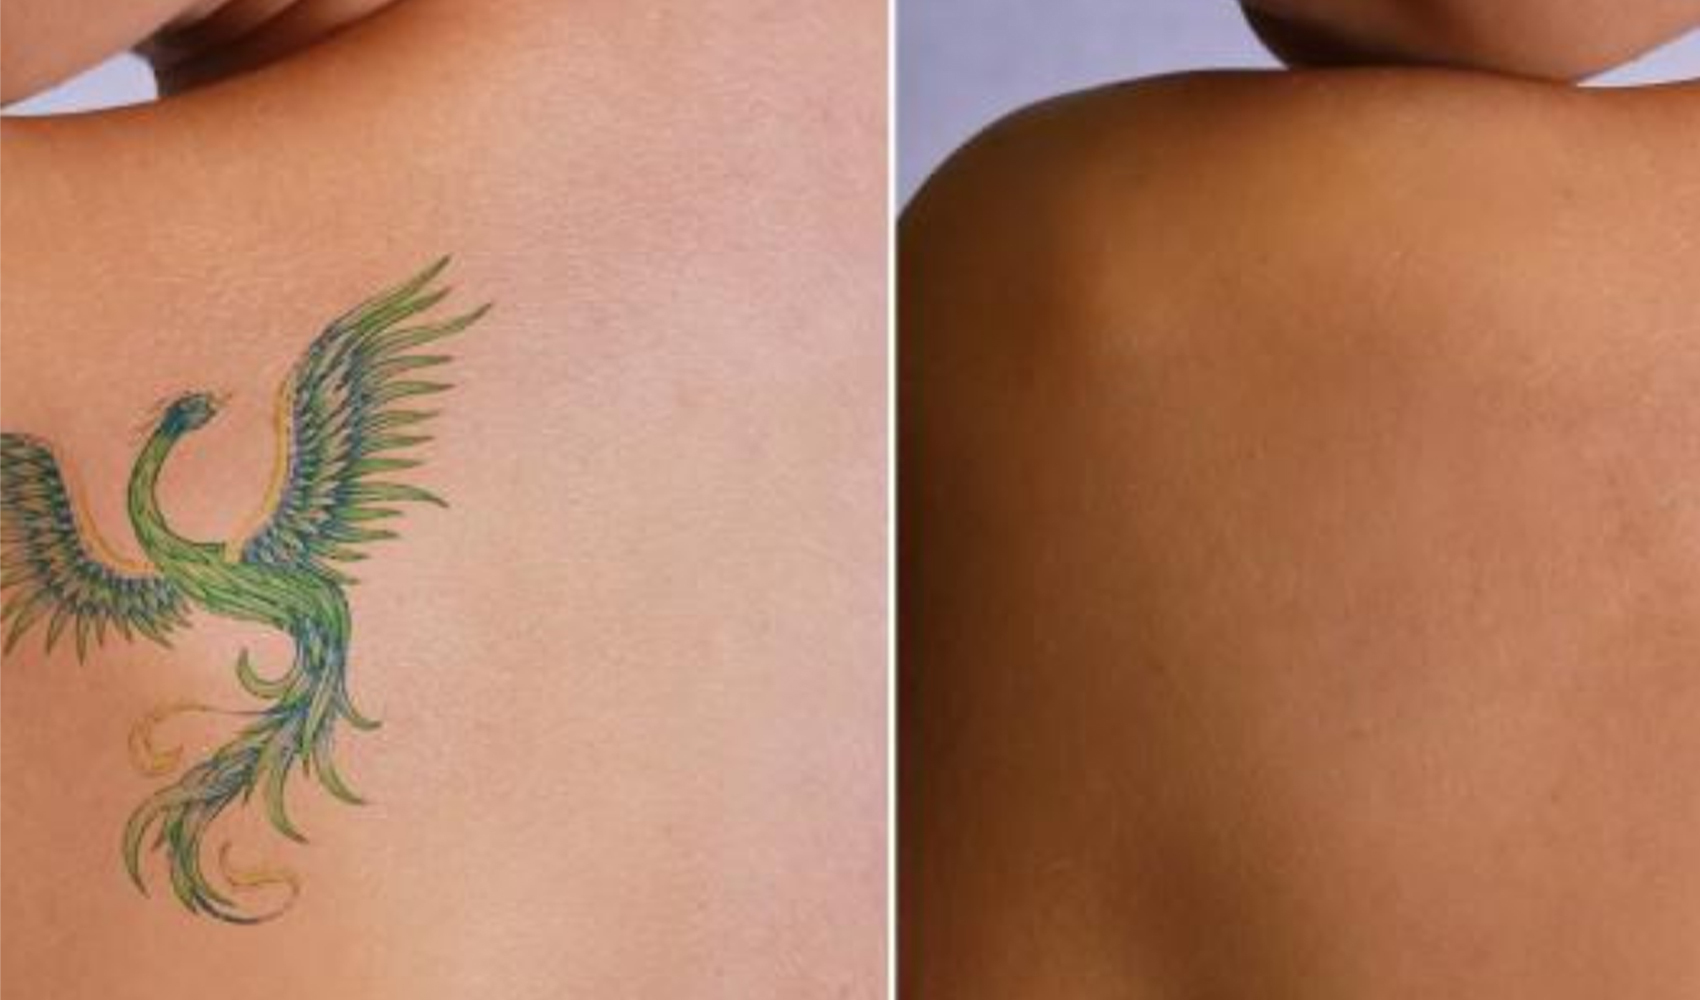 Picosure Laser Tattoo Removal Treatment and Skin Rejuvenation Toronto